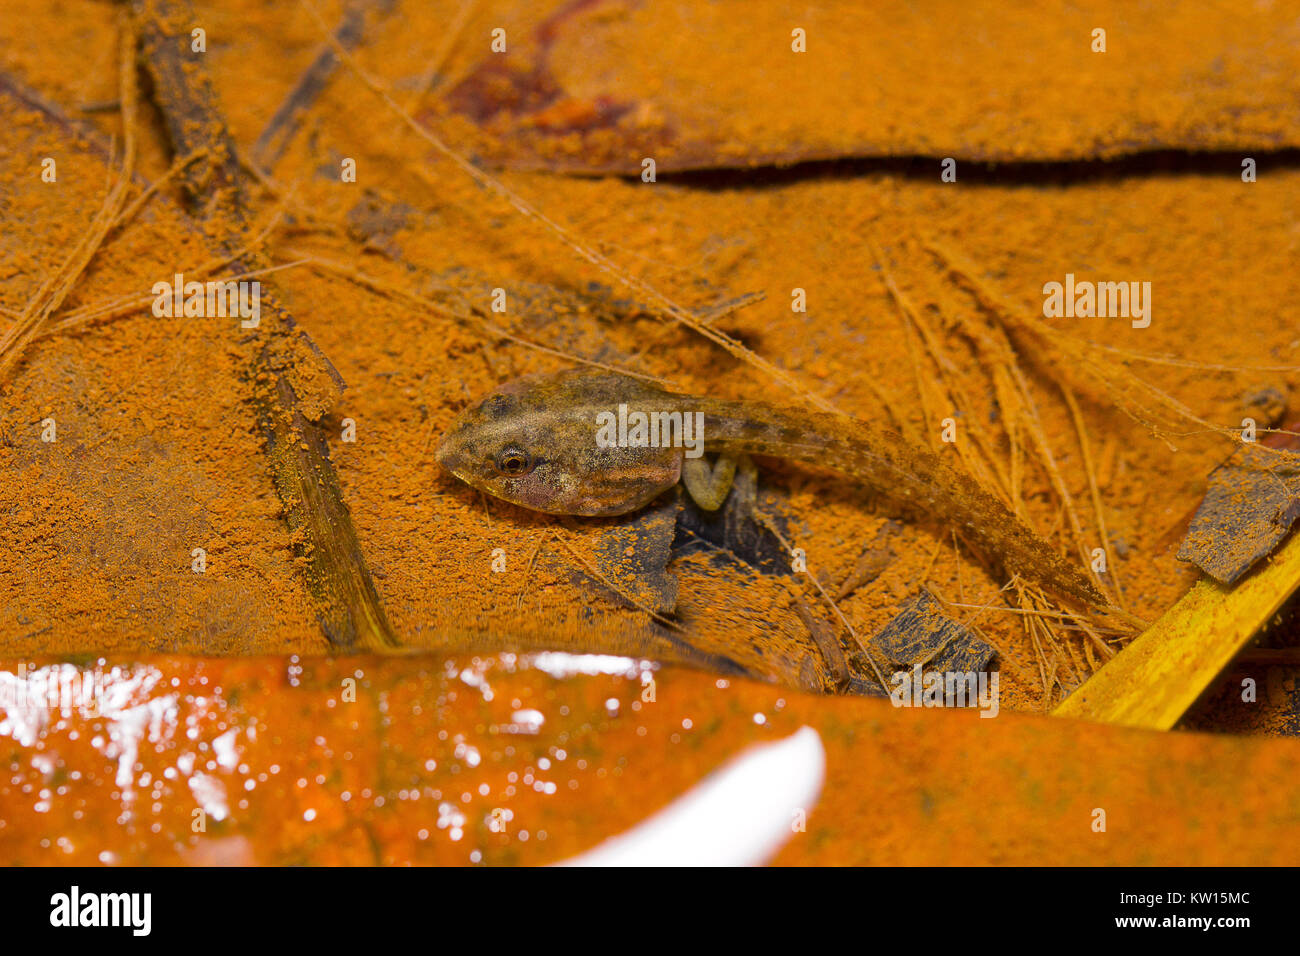 Indian Skipper Frog tadpole, Skittering Rana, Euphlyctis cyanophlyctis. Pondicherry, Tamil Nadu, India. Si tratta di un marroncino pallido rana viscido opener Foto Stock